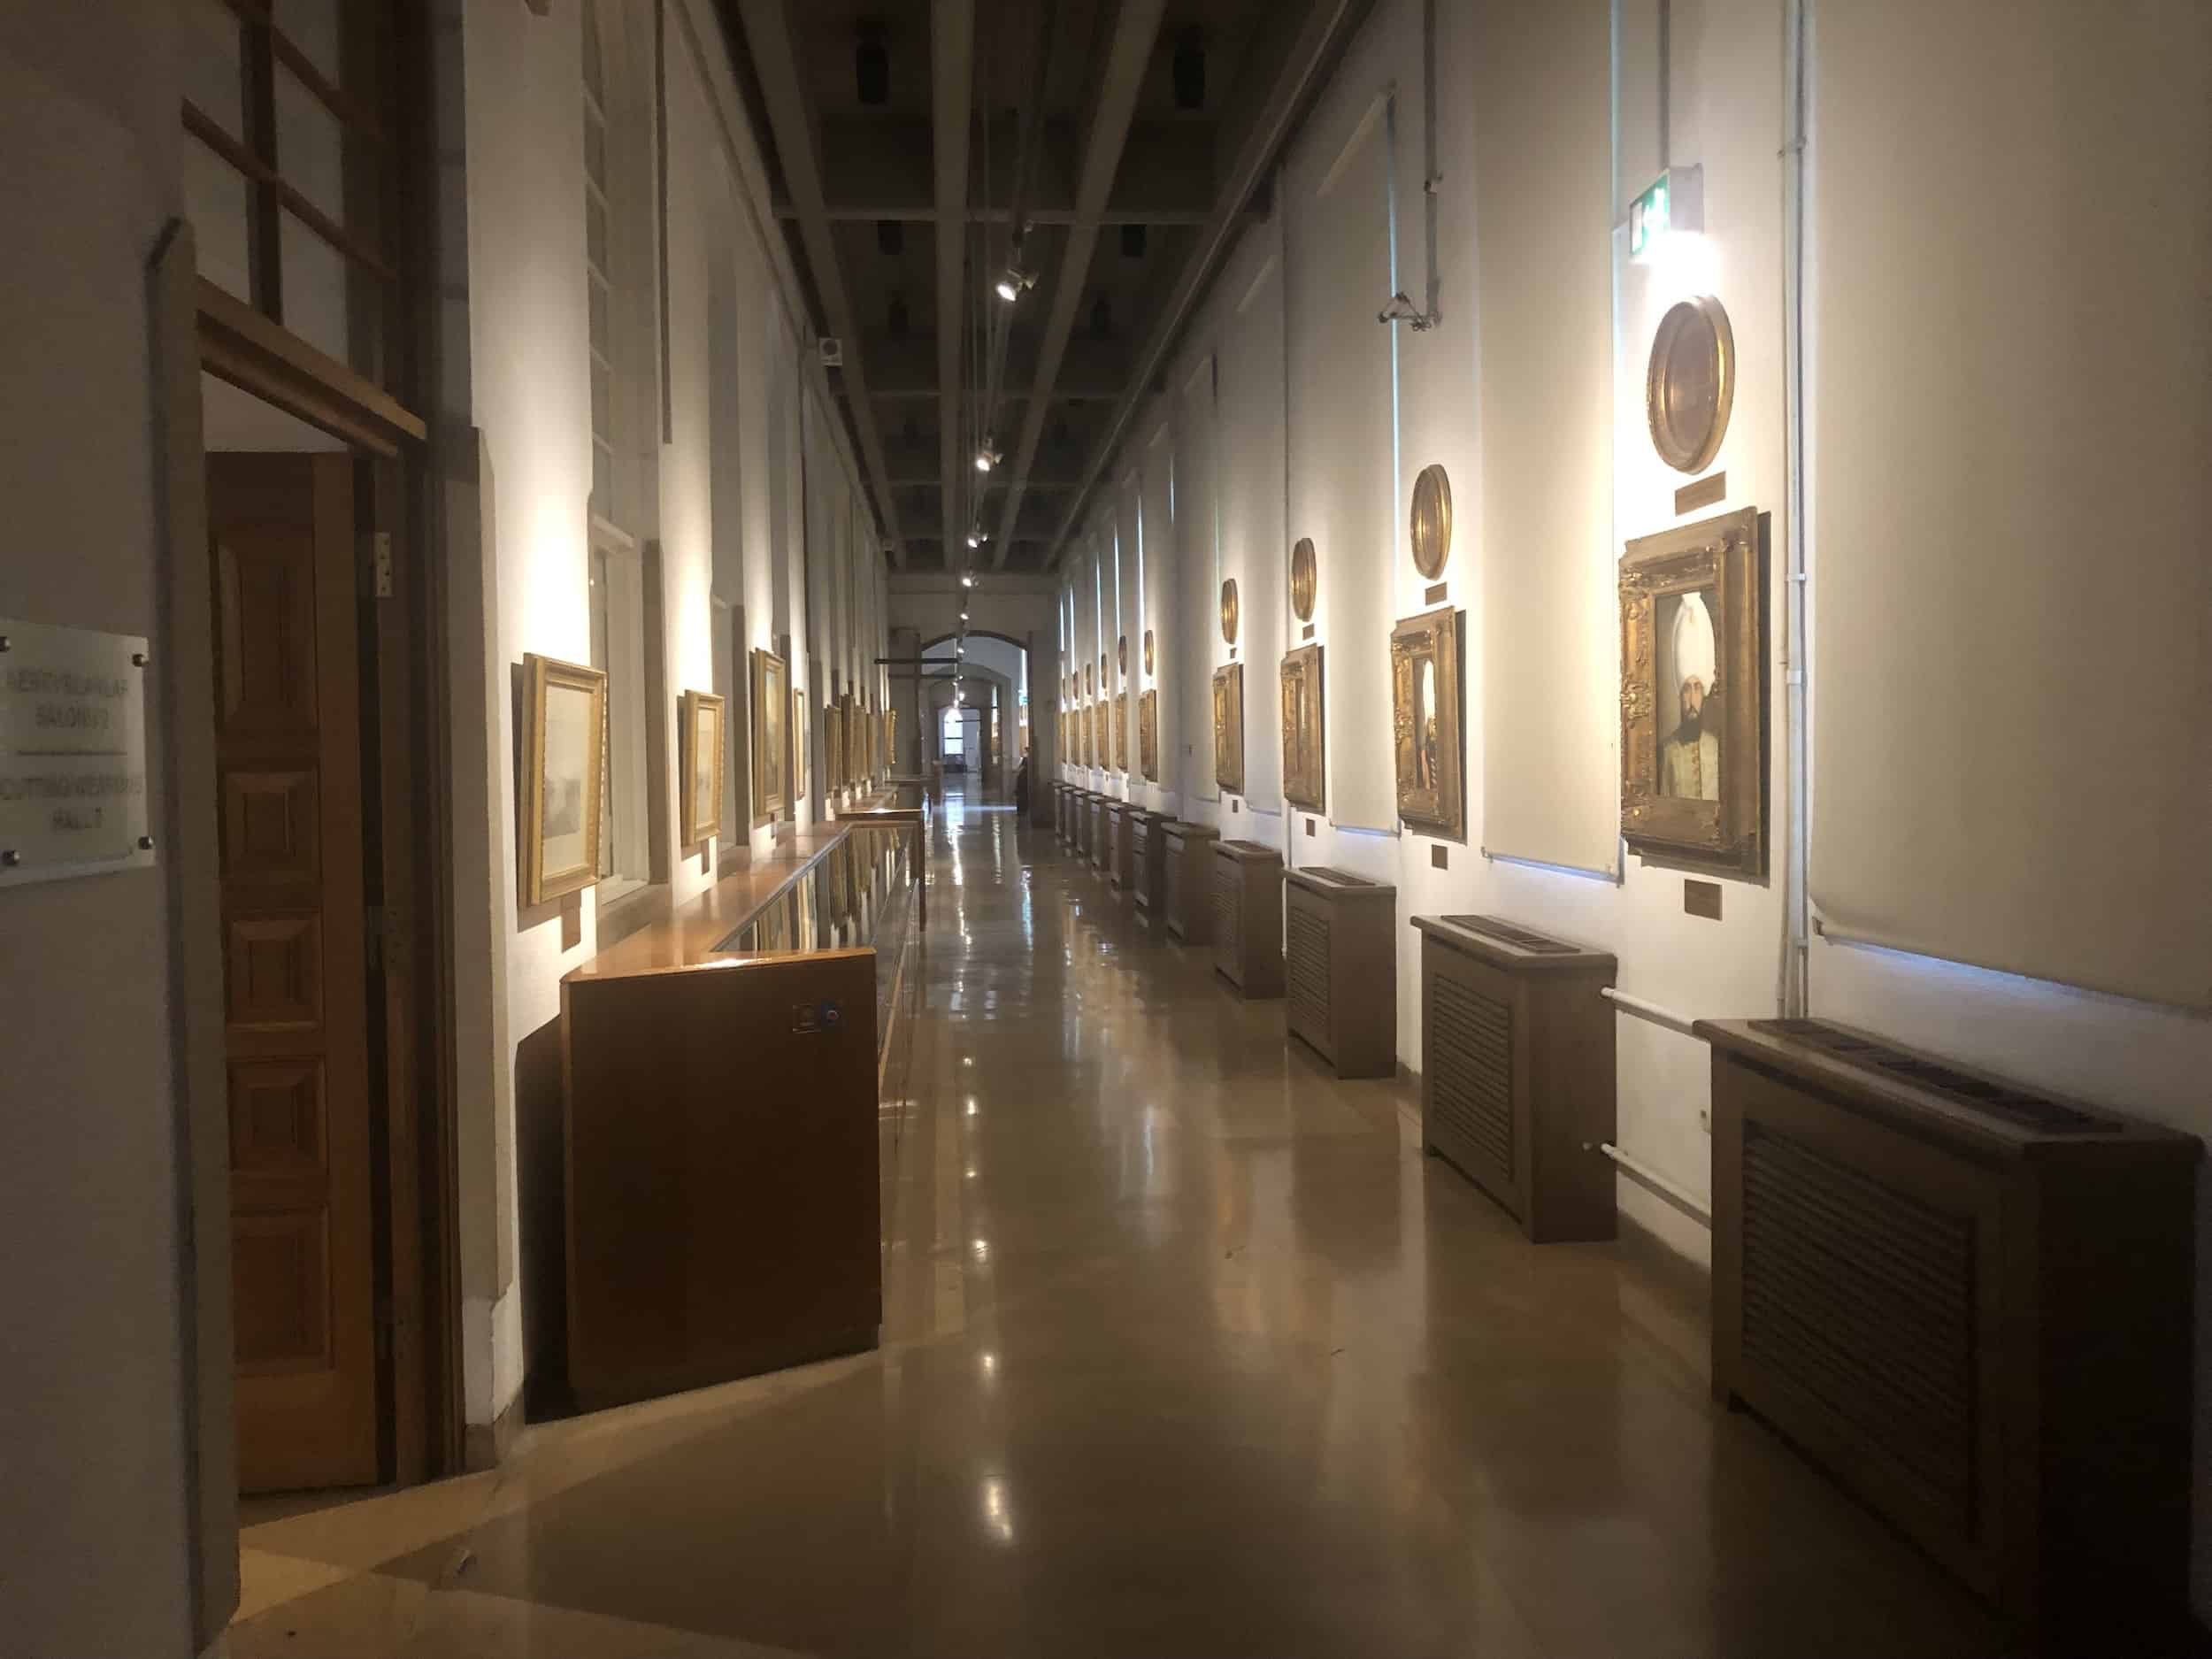 Ground Floor Corridor Exhibition Area at the Harbiye Military Museum in Istanbul, Turkey